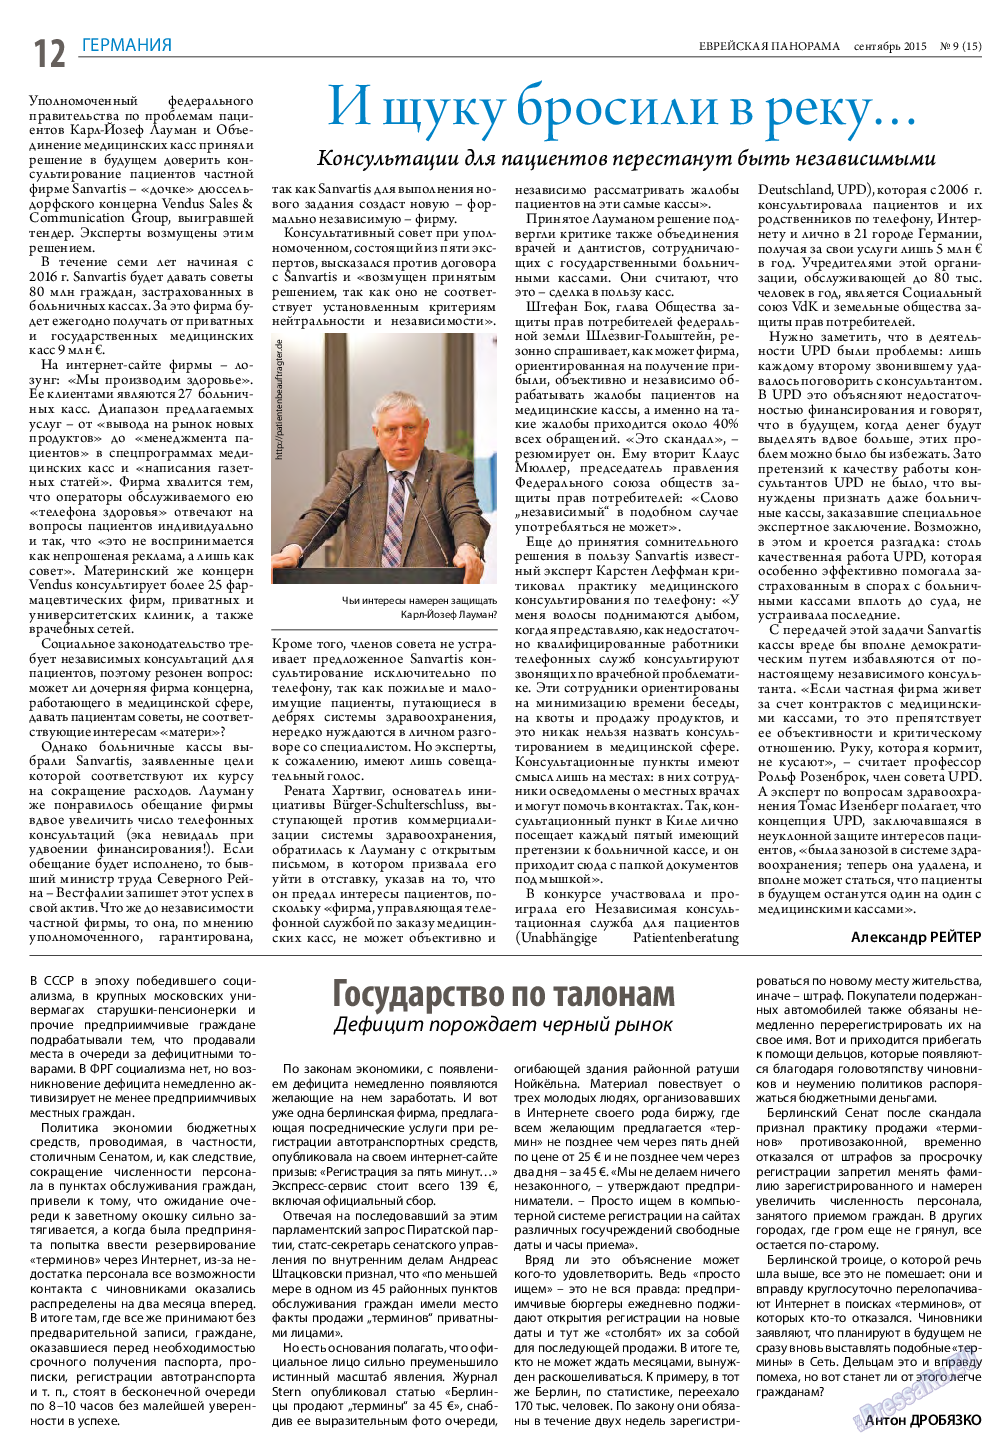 Еврейская панорама, газета. 2015 №9 стр.12